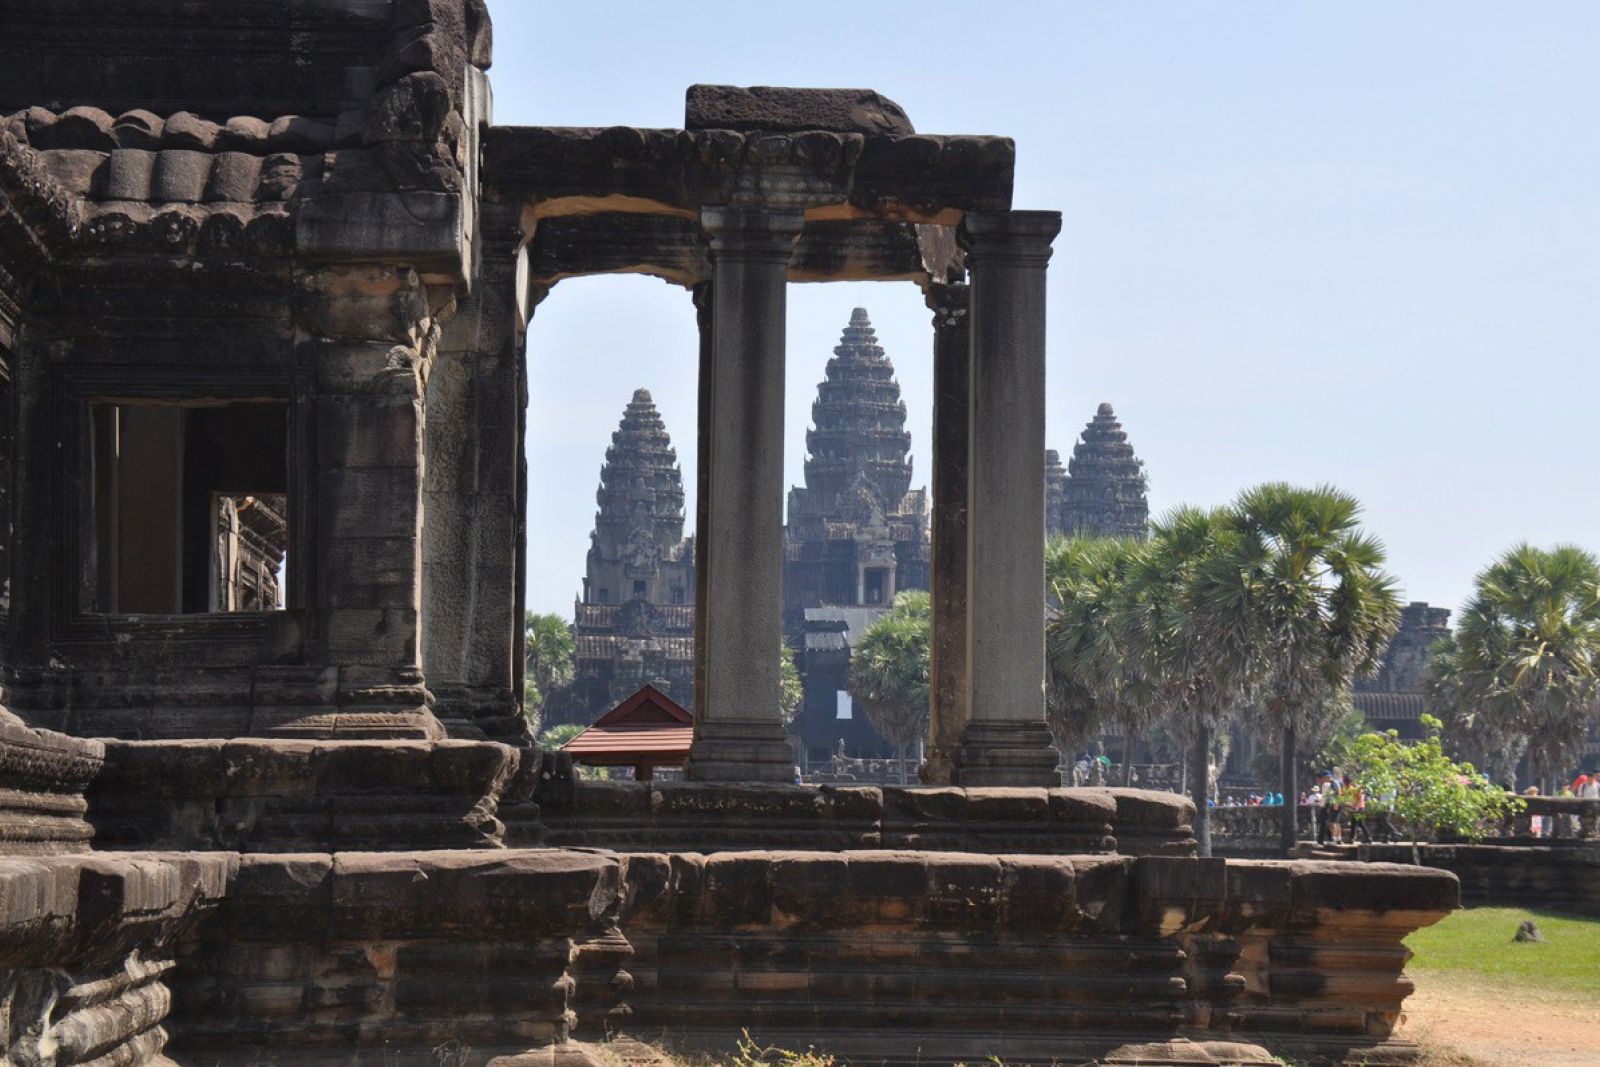 Blick auf den mächtigen Tempel von Angkor Wat